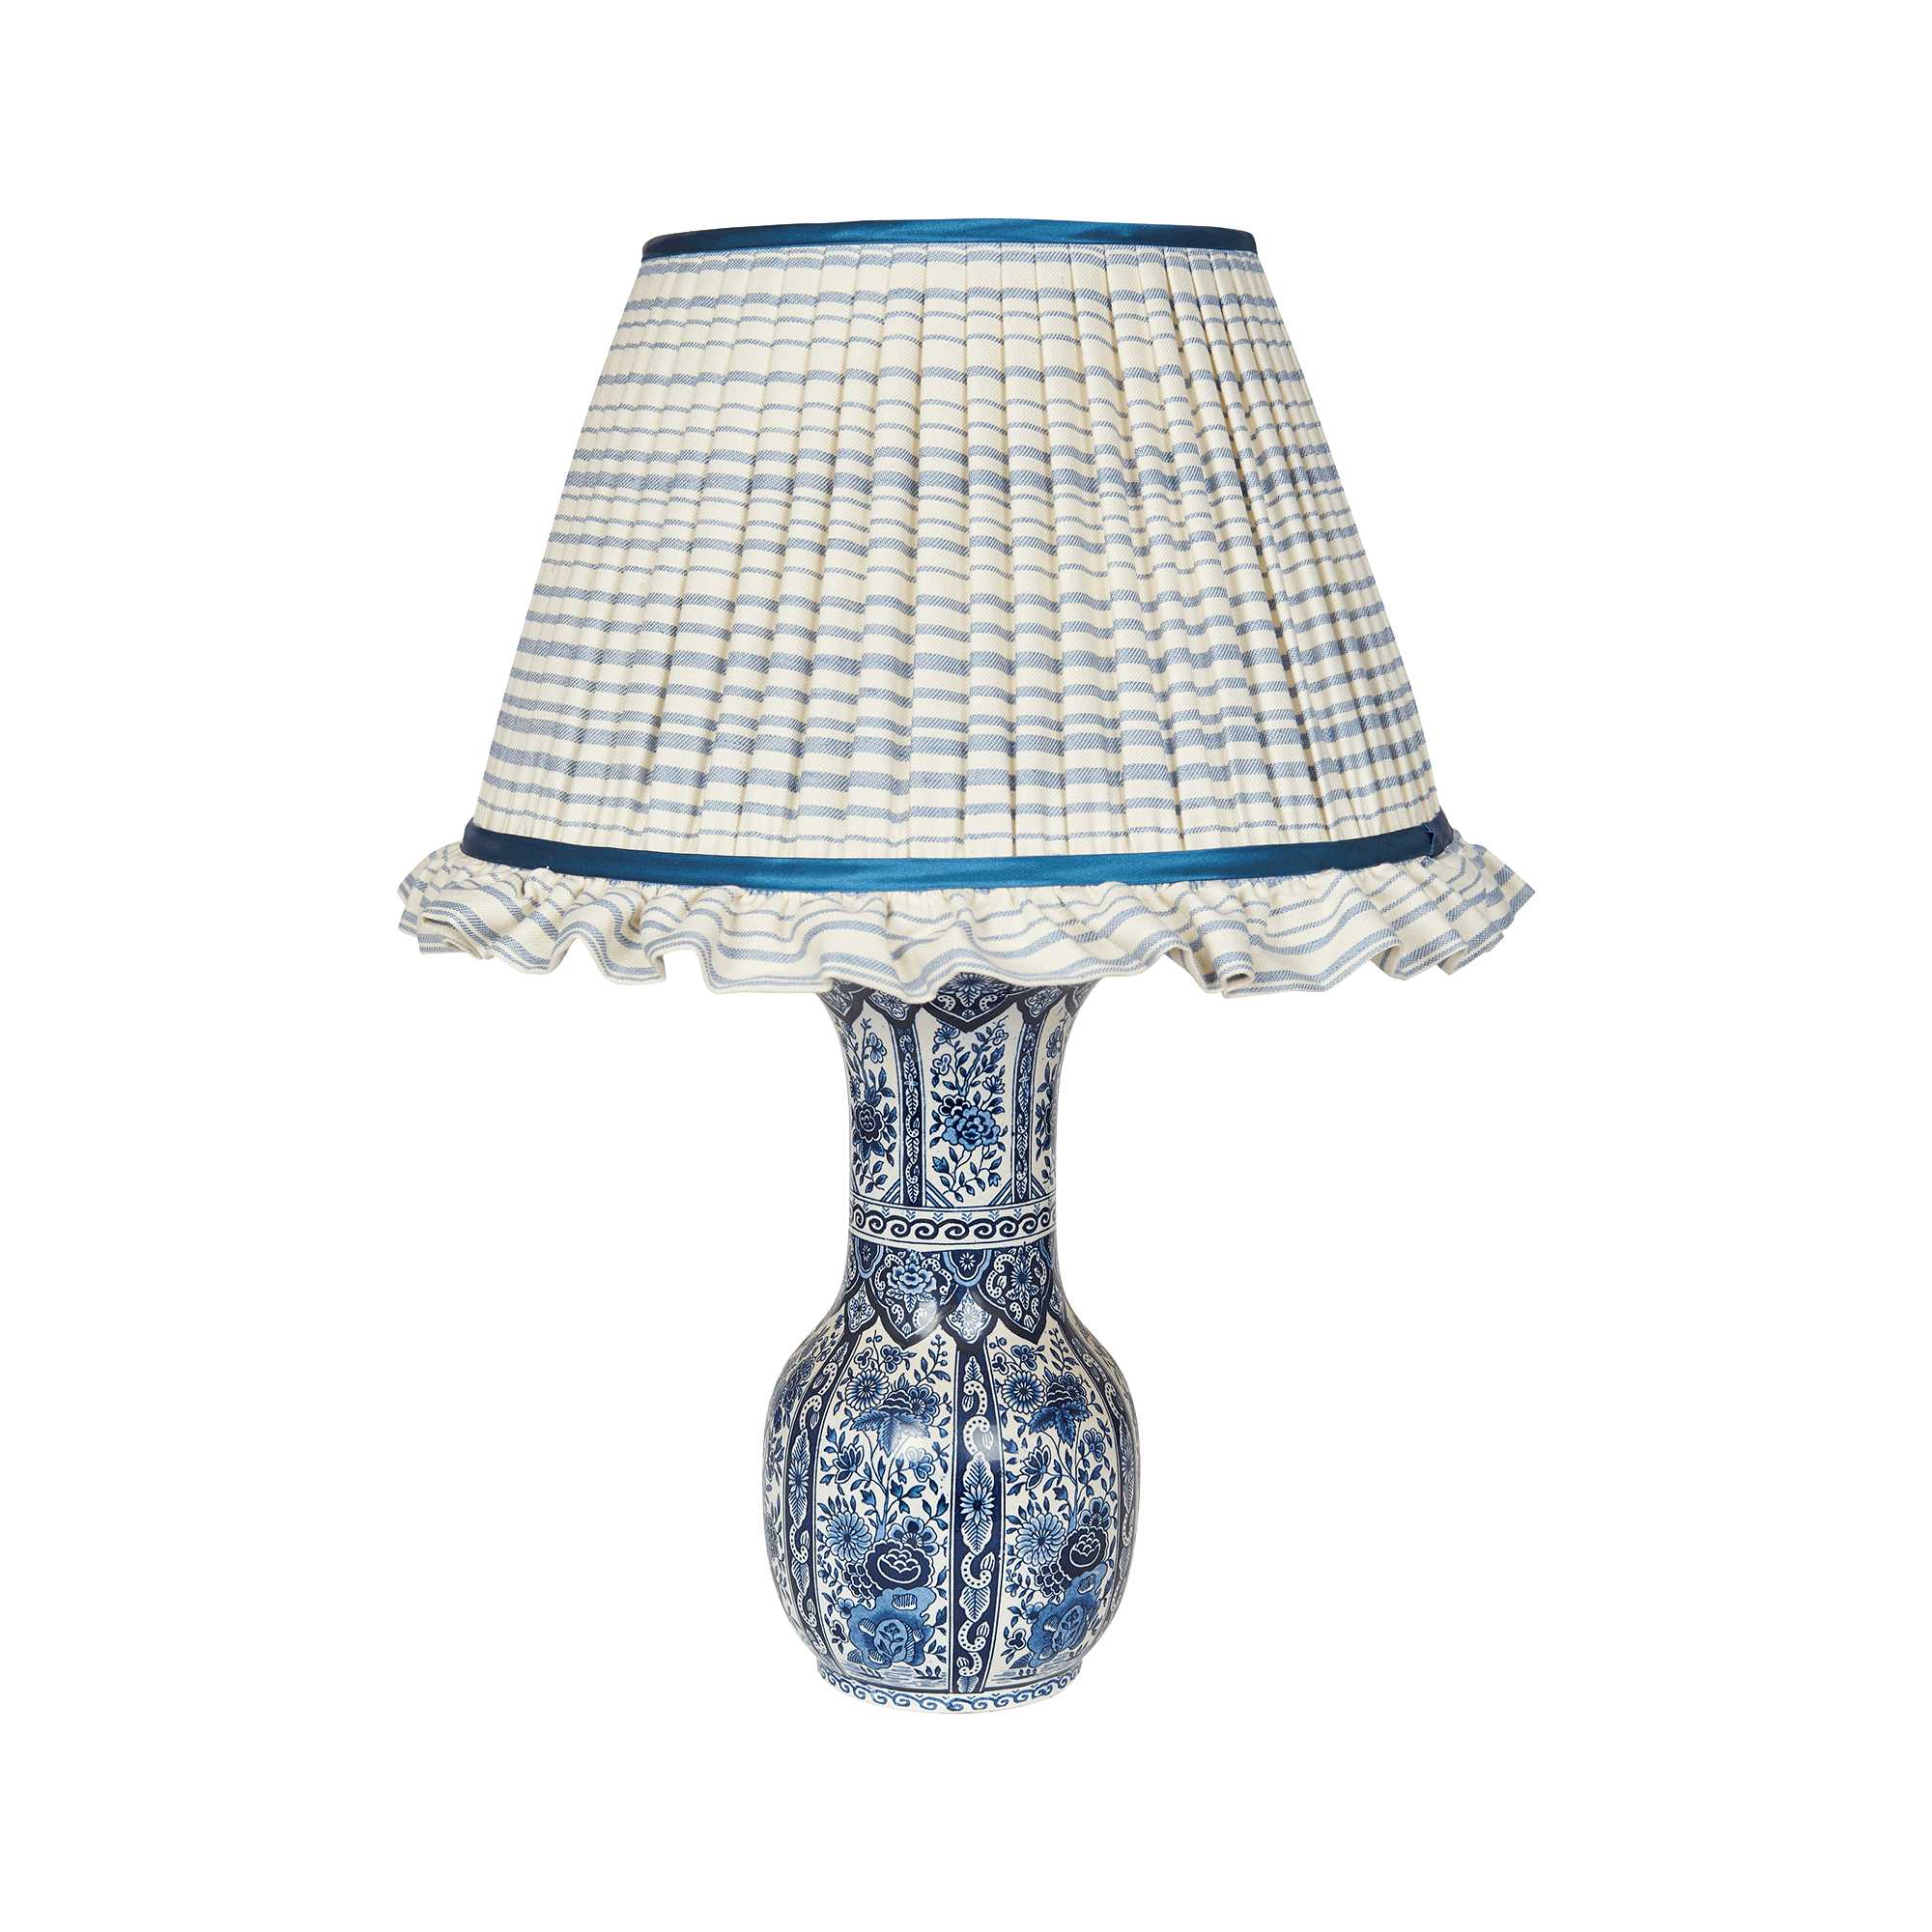 LAM-016 Blue and White Vase Lamp